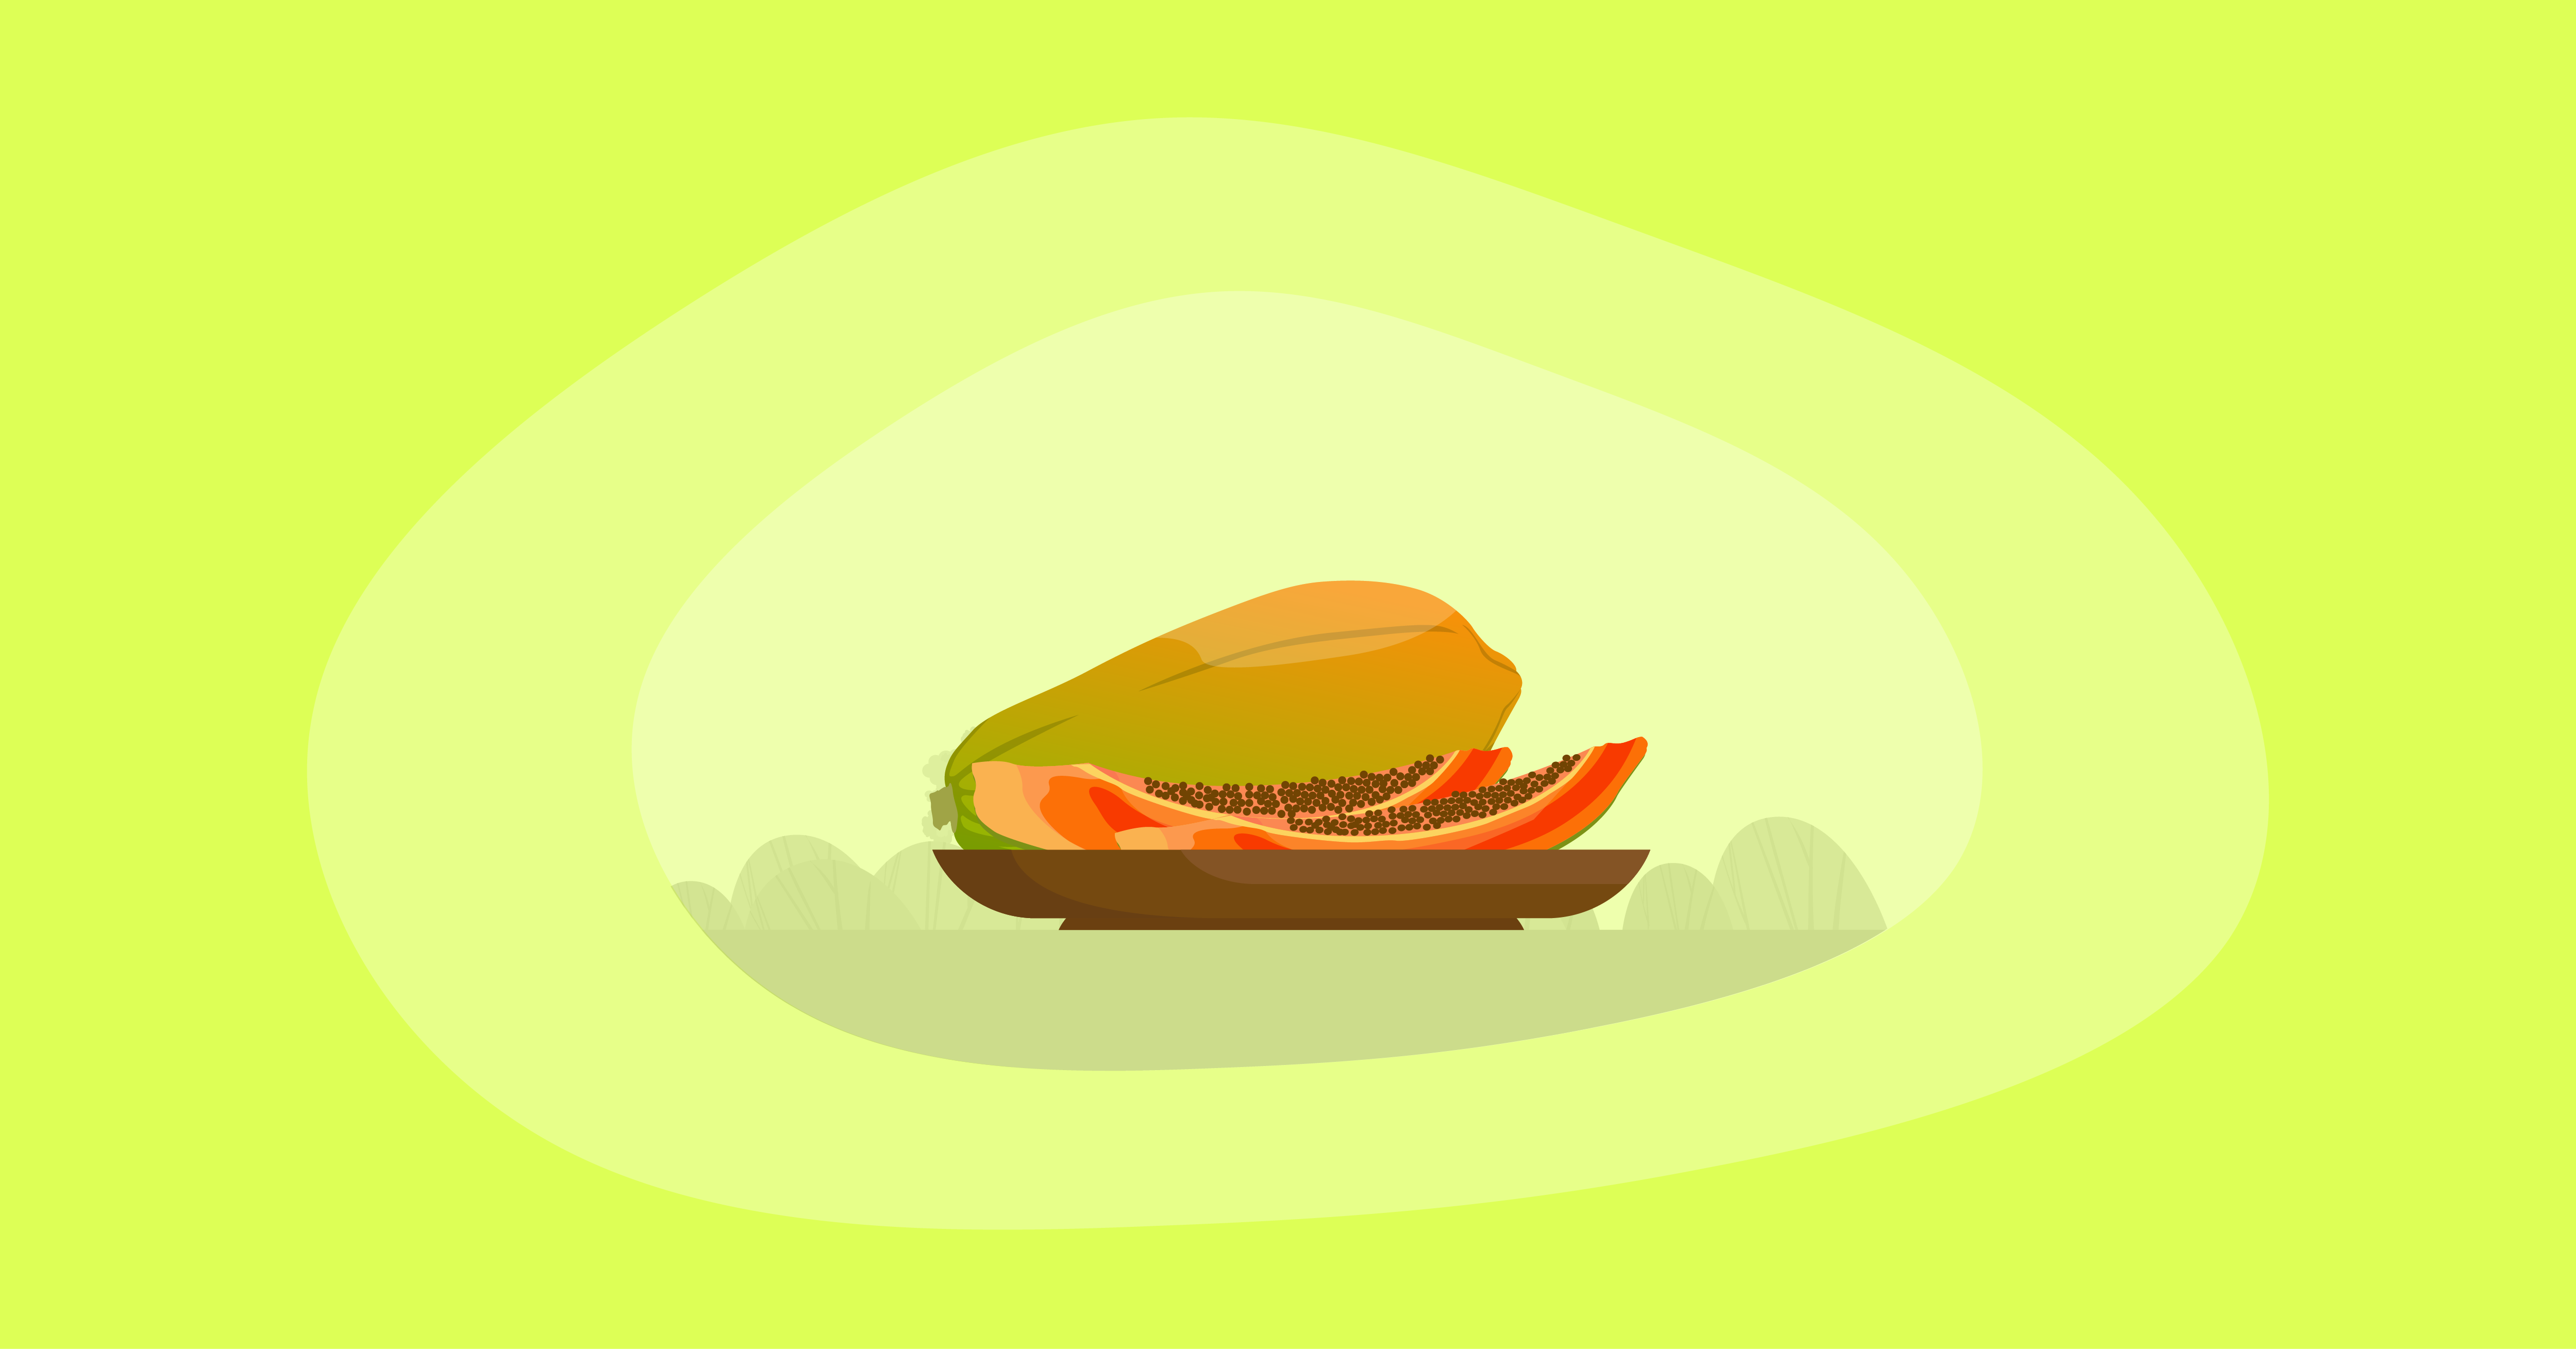 Illustration of papayas in a wooden platter